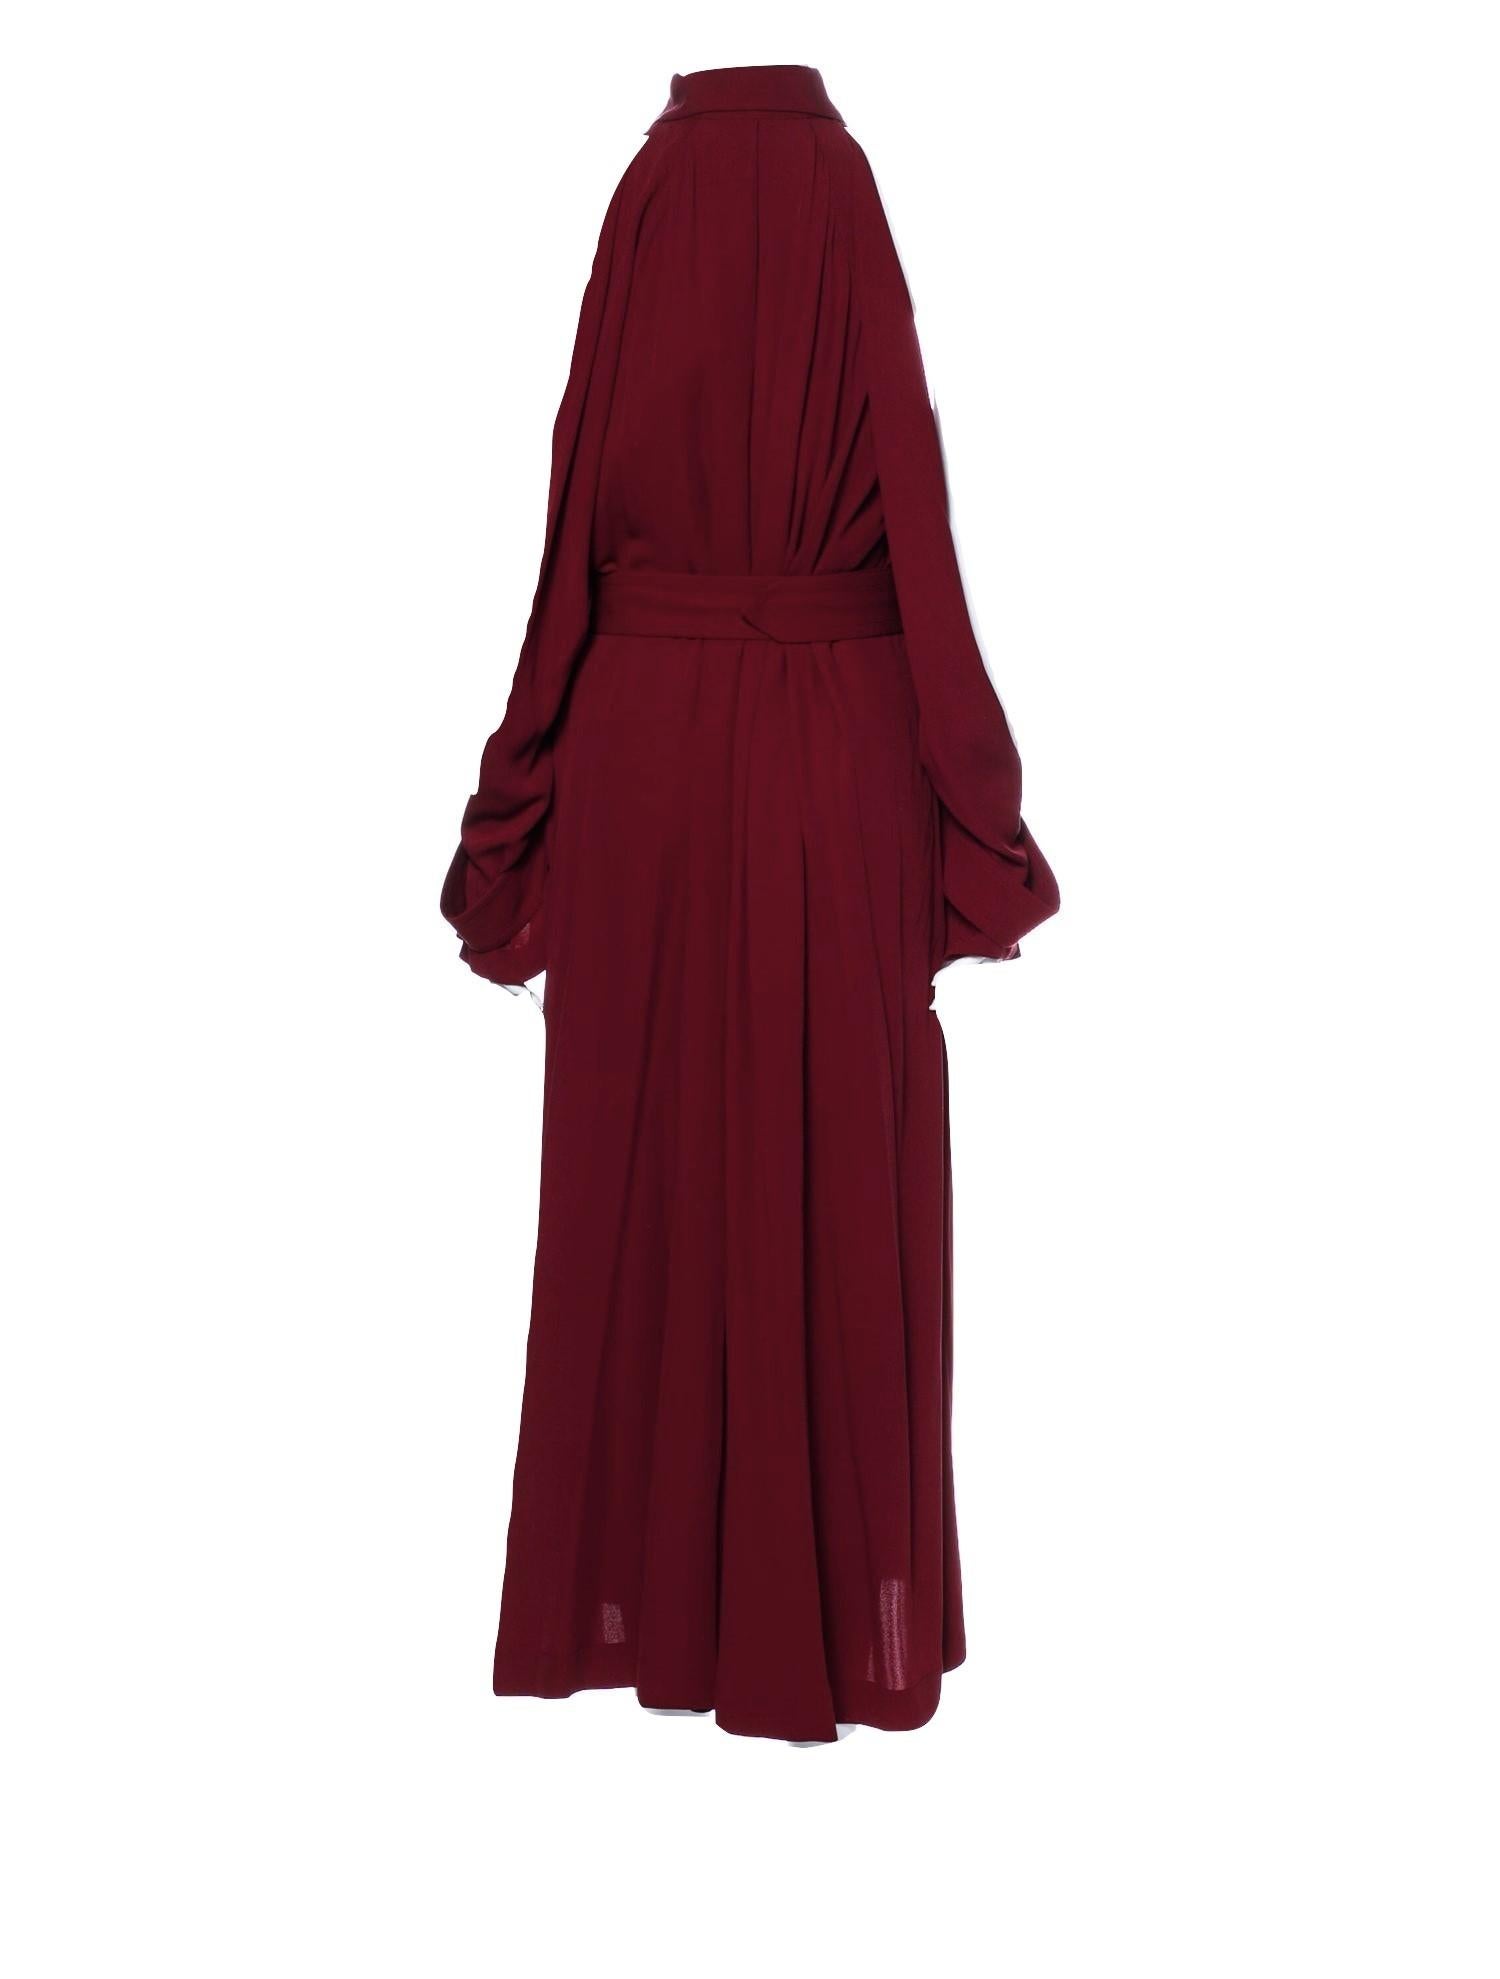 New Rare Salvatore Ferragamo Red Silk Dress F/W 2018  With Tags $3200 Sz 42 1